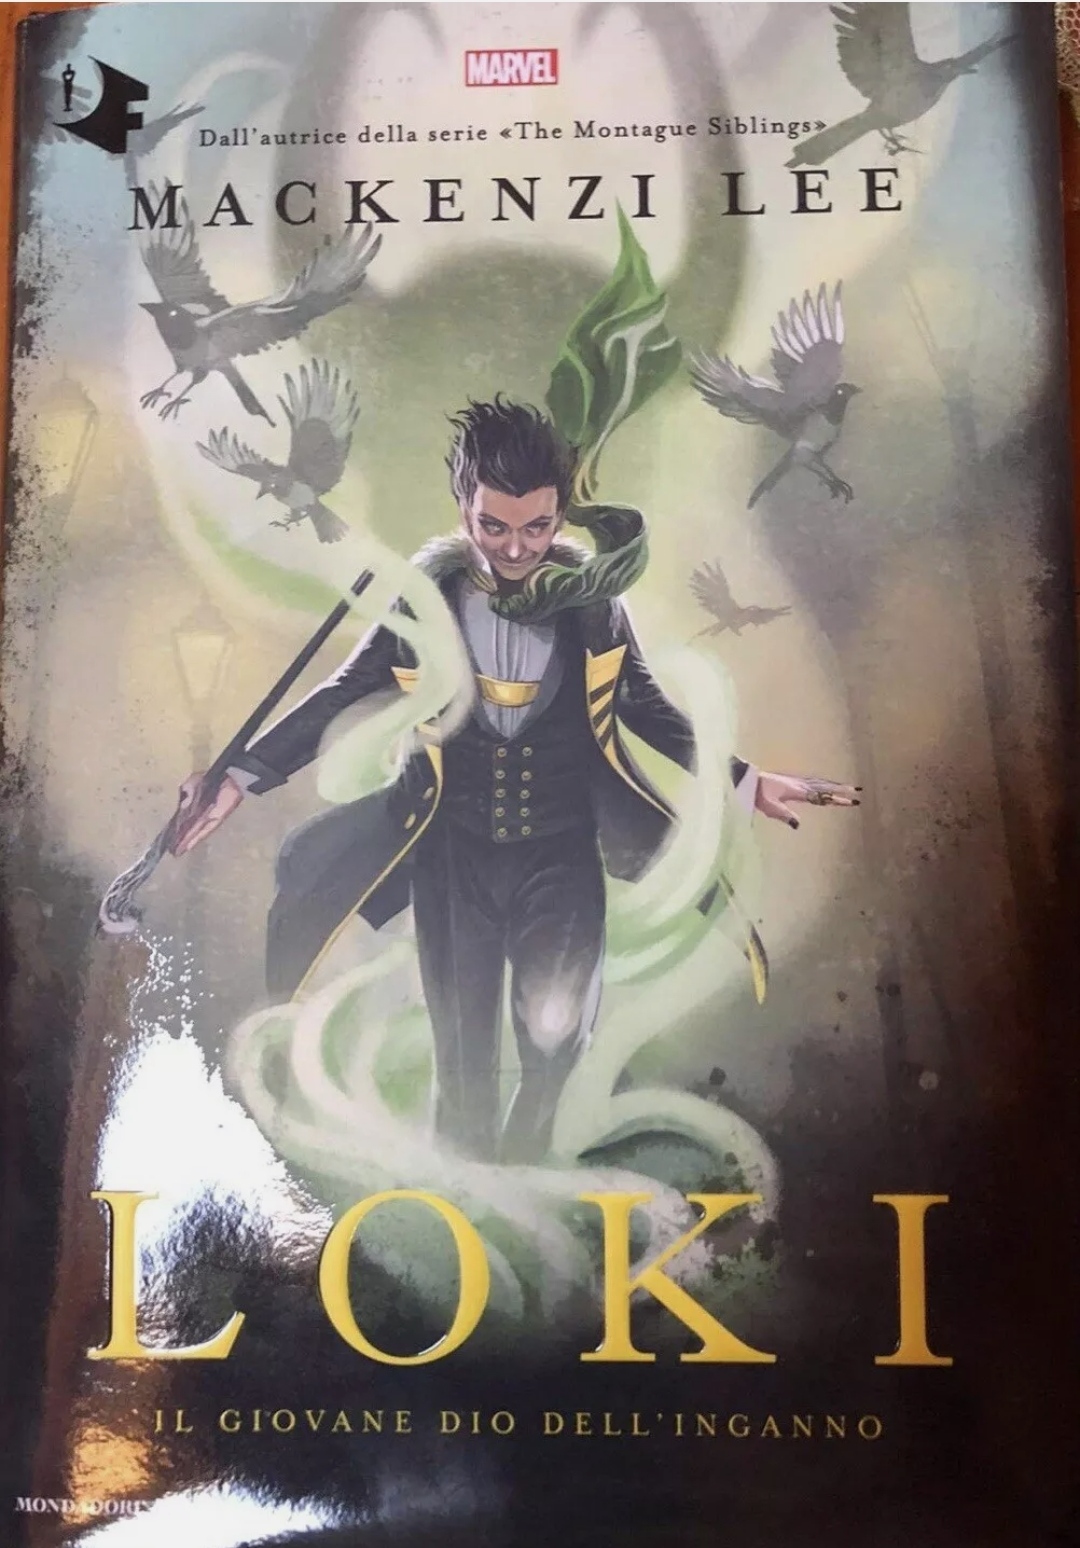 Libro “Loki – Il Giovane Dio dell’Inganno” – Mackenzi Lee